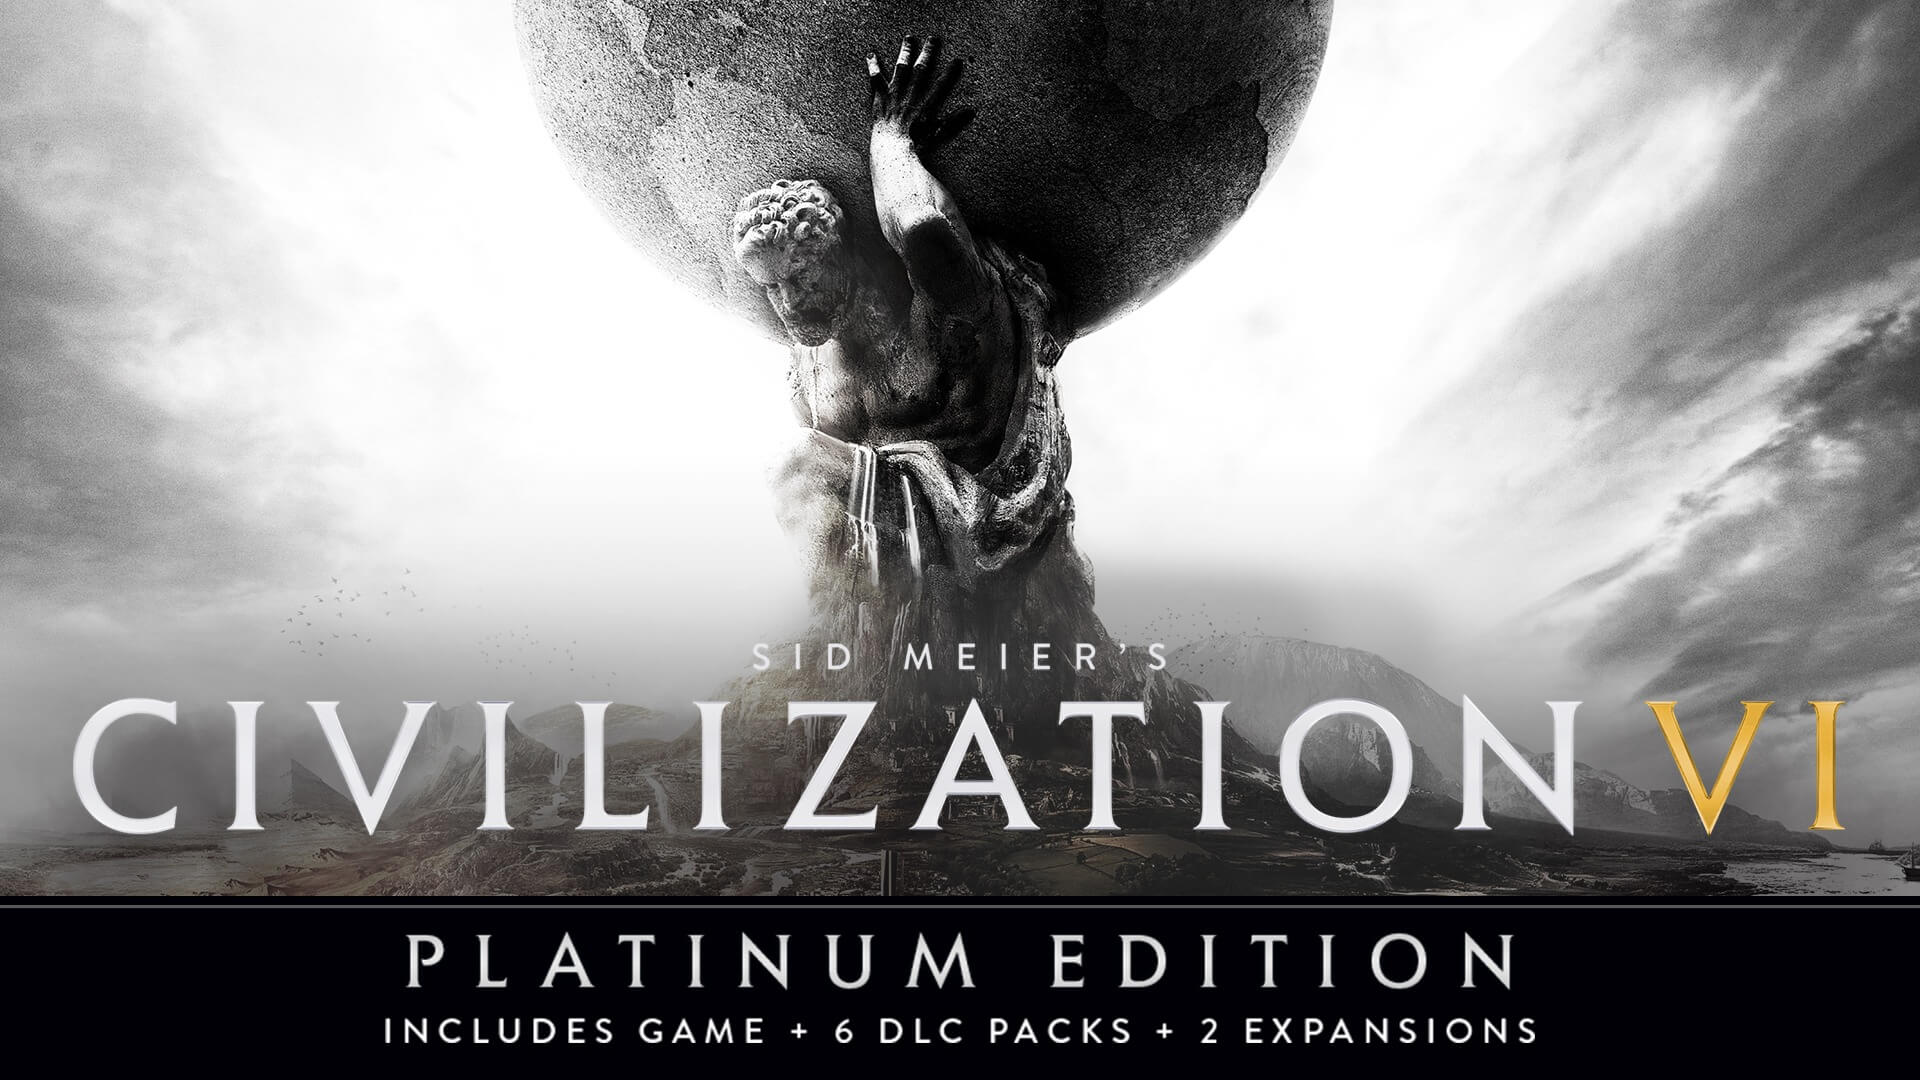 Sid Meier’s Civilization VI plati-1.runum Edition Steam Key